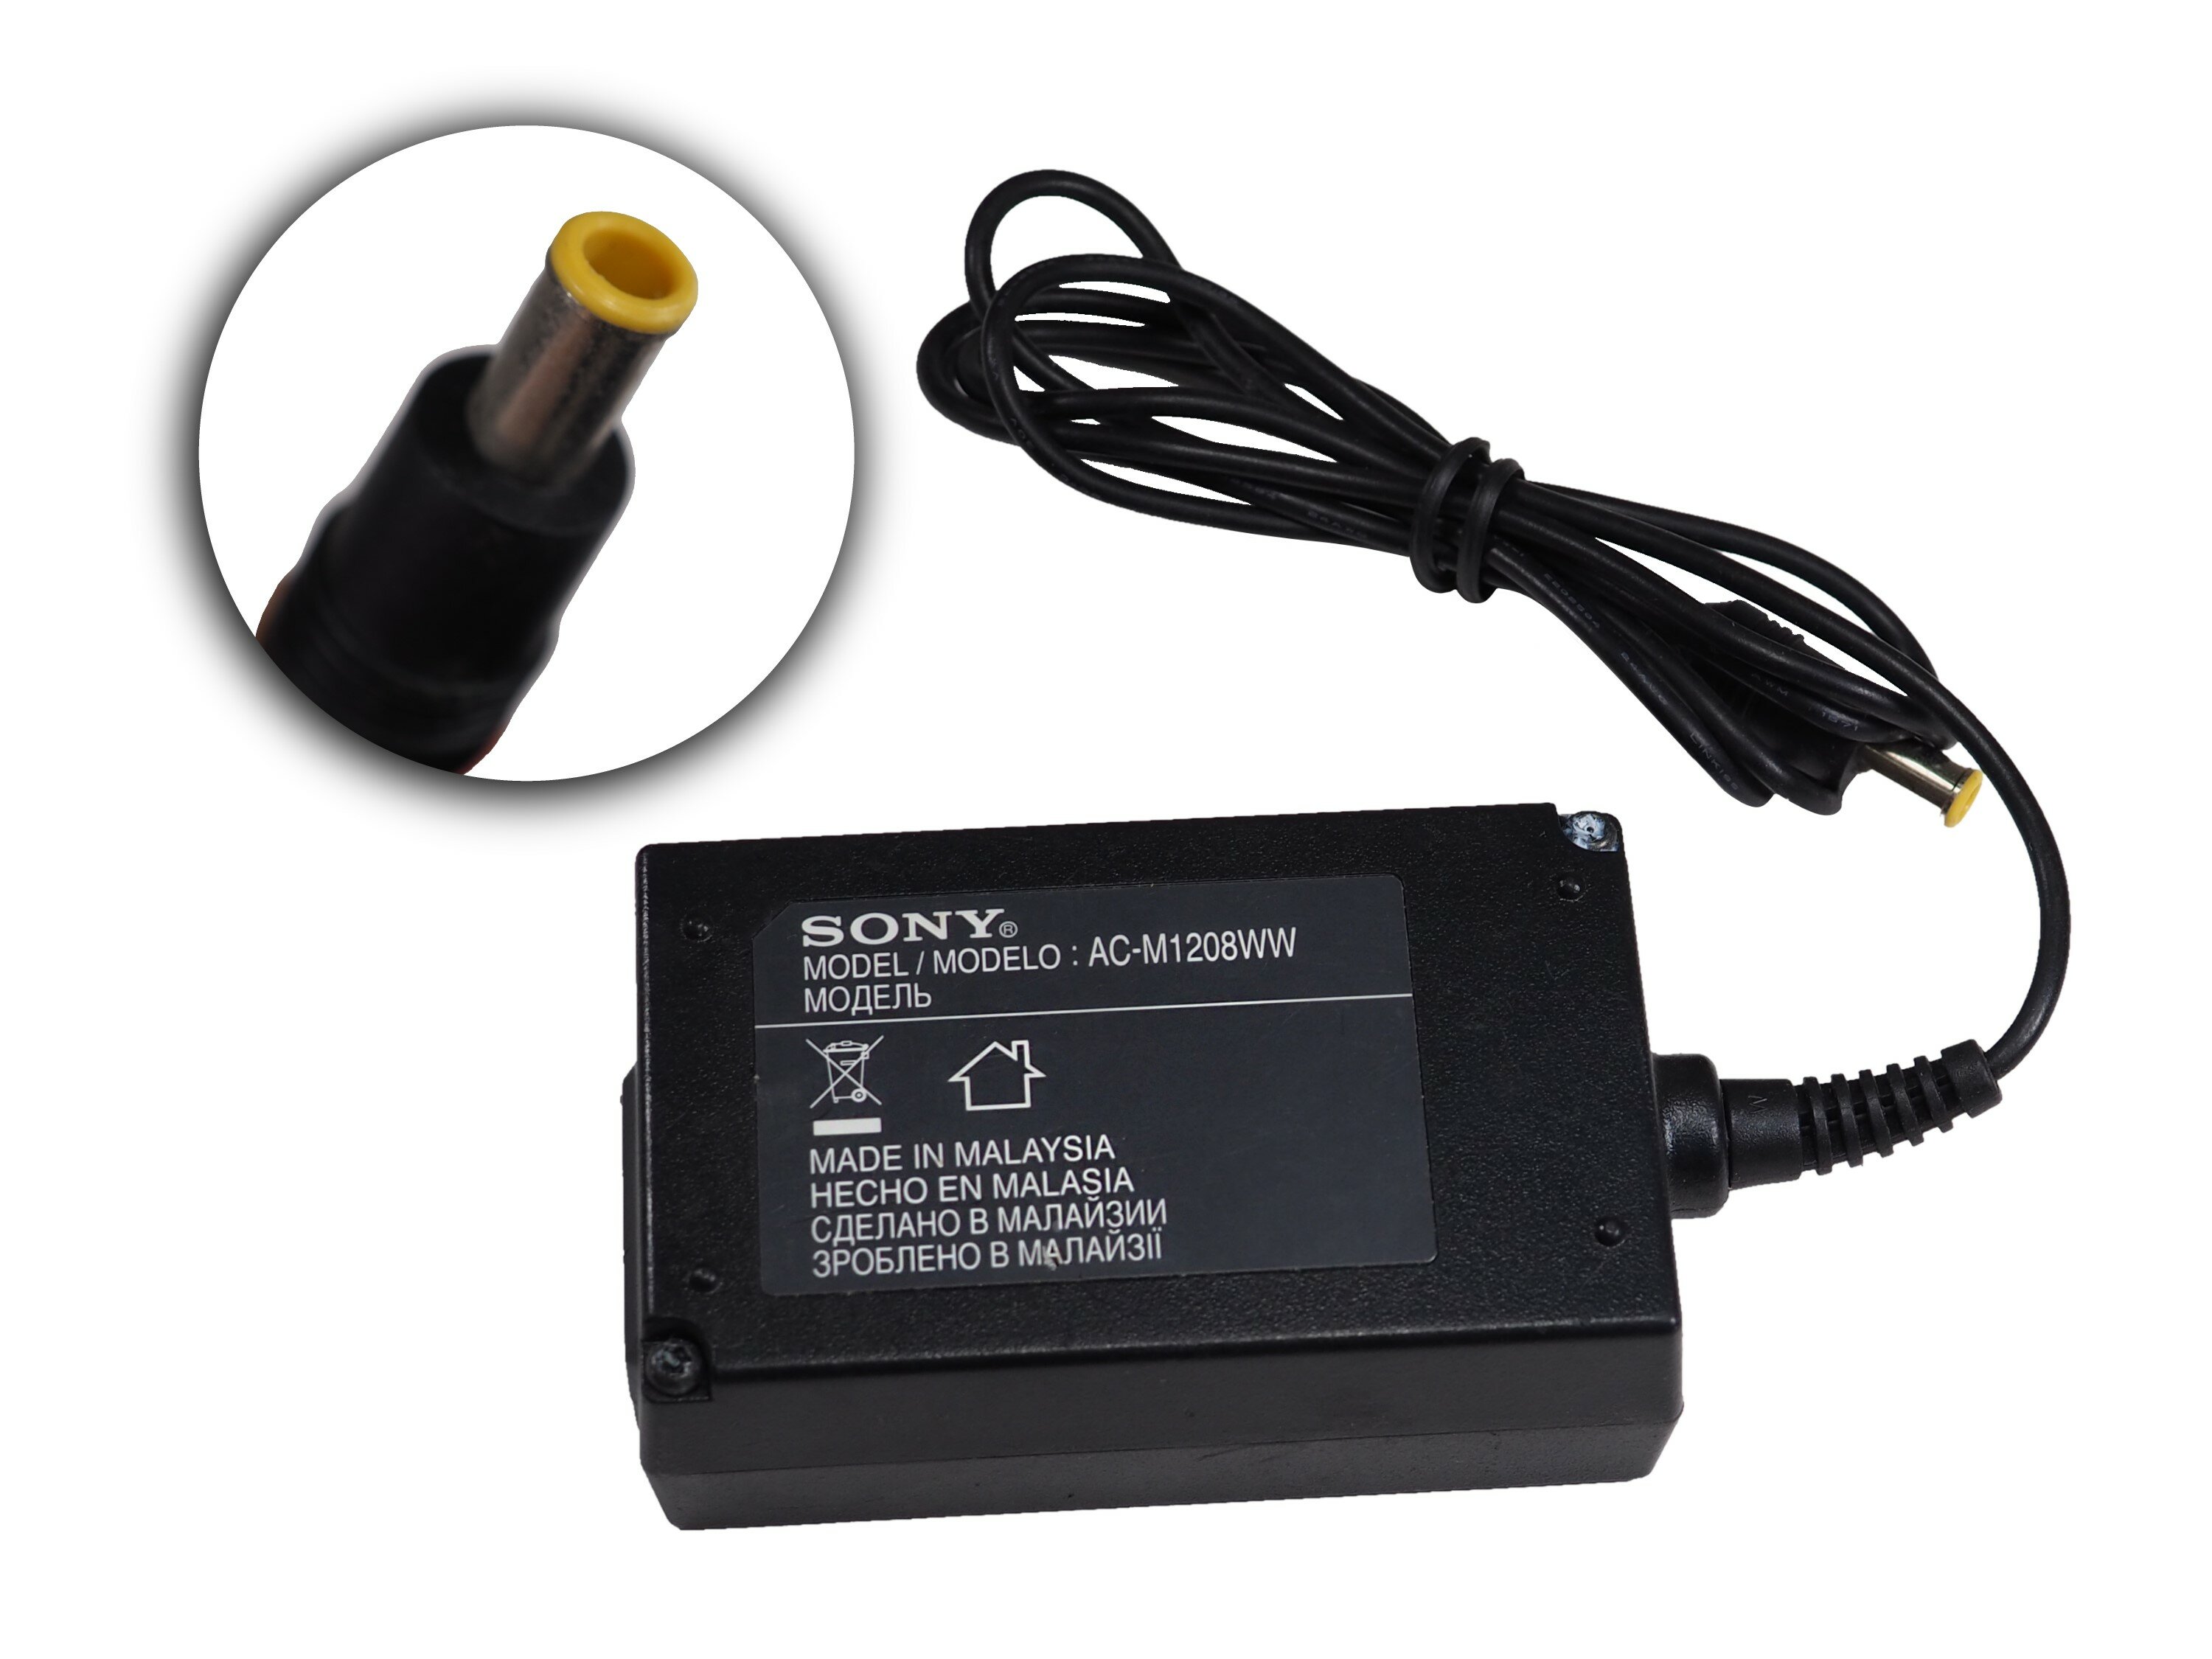 Адаптер переменного тока (блок питания) для SONY AC-M1208WW 12V - 800mA совместимый